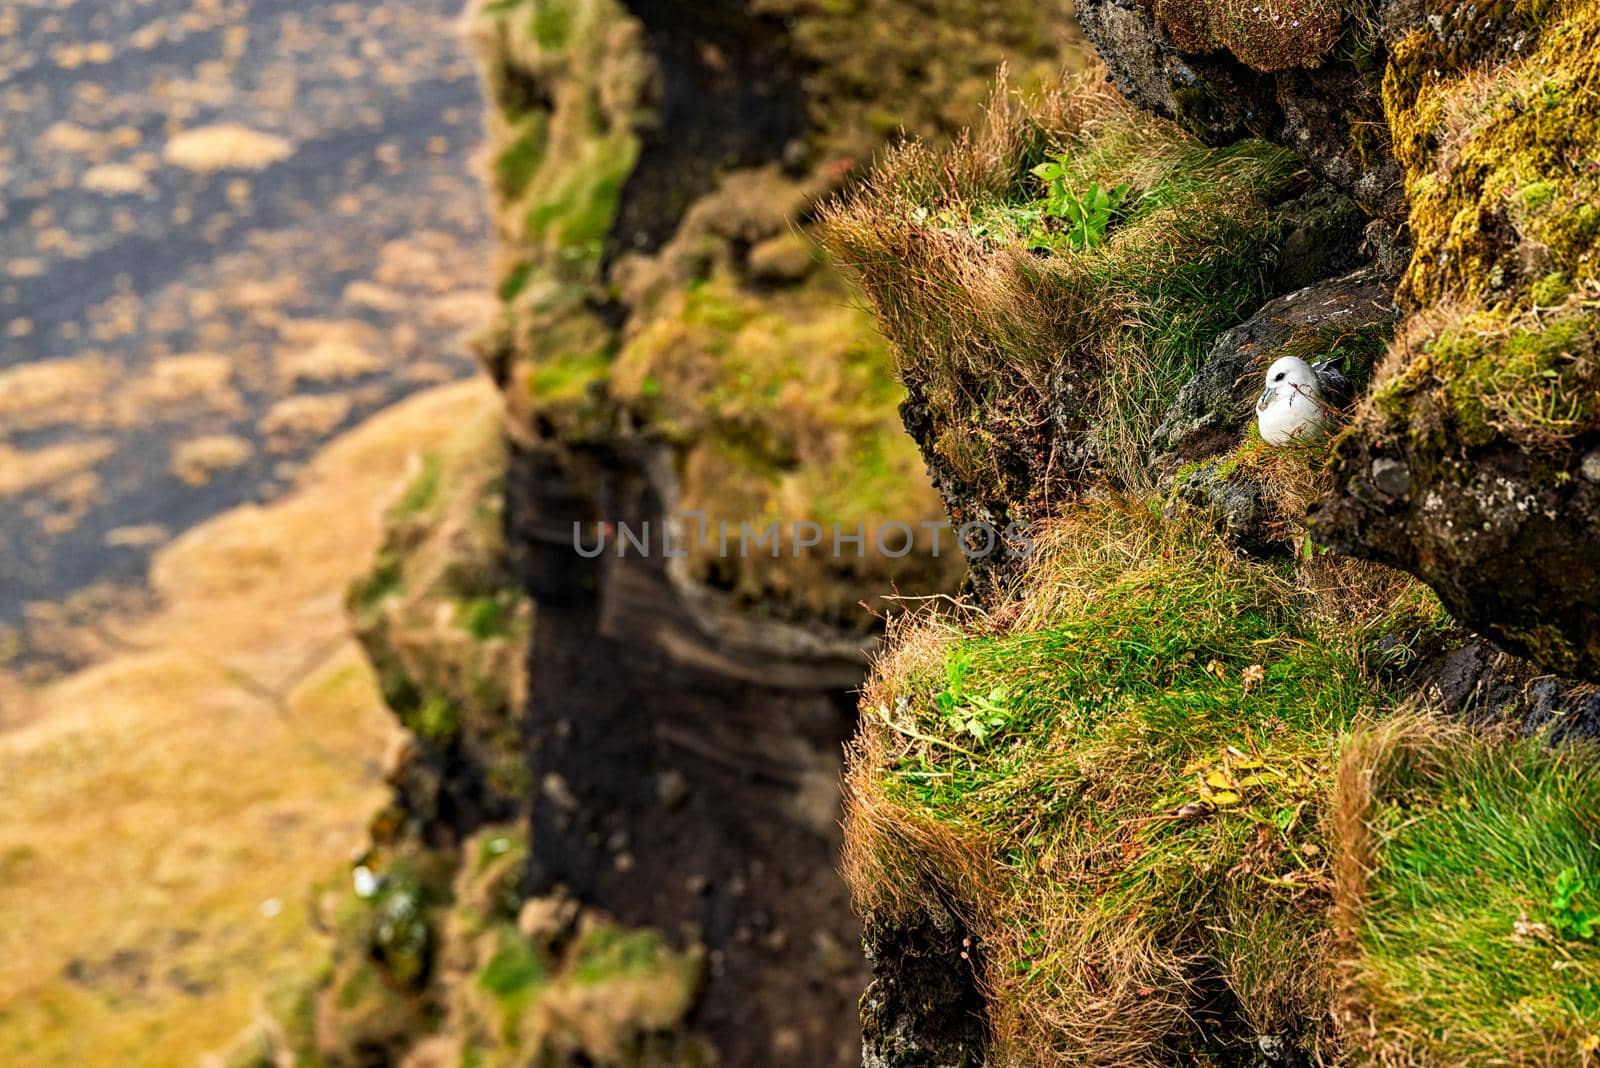 Wild pigeon bird in Dyrholaey, Iceland by LuigiMorbidelli